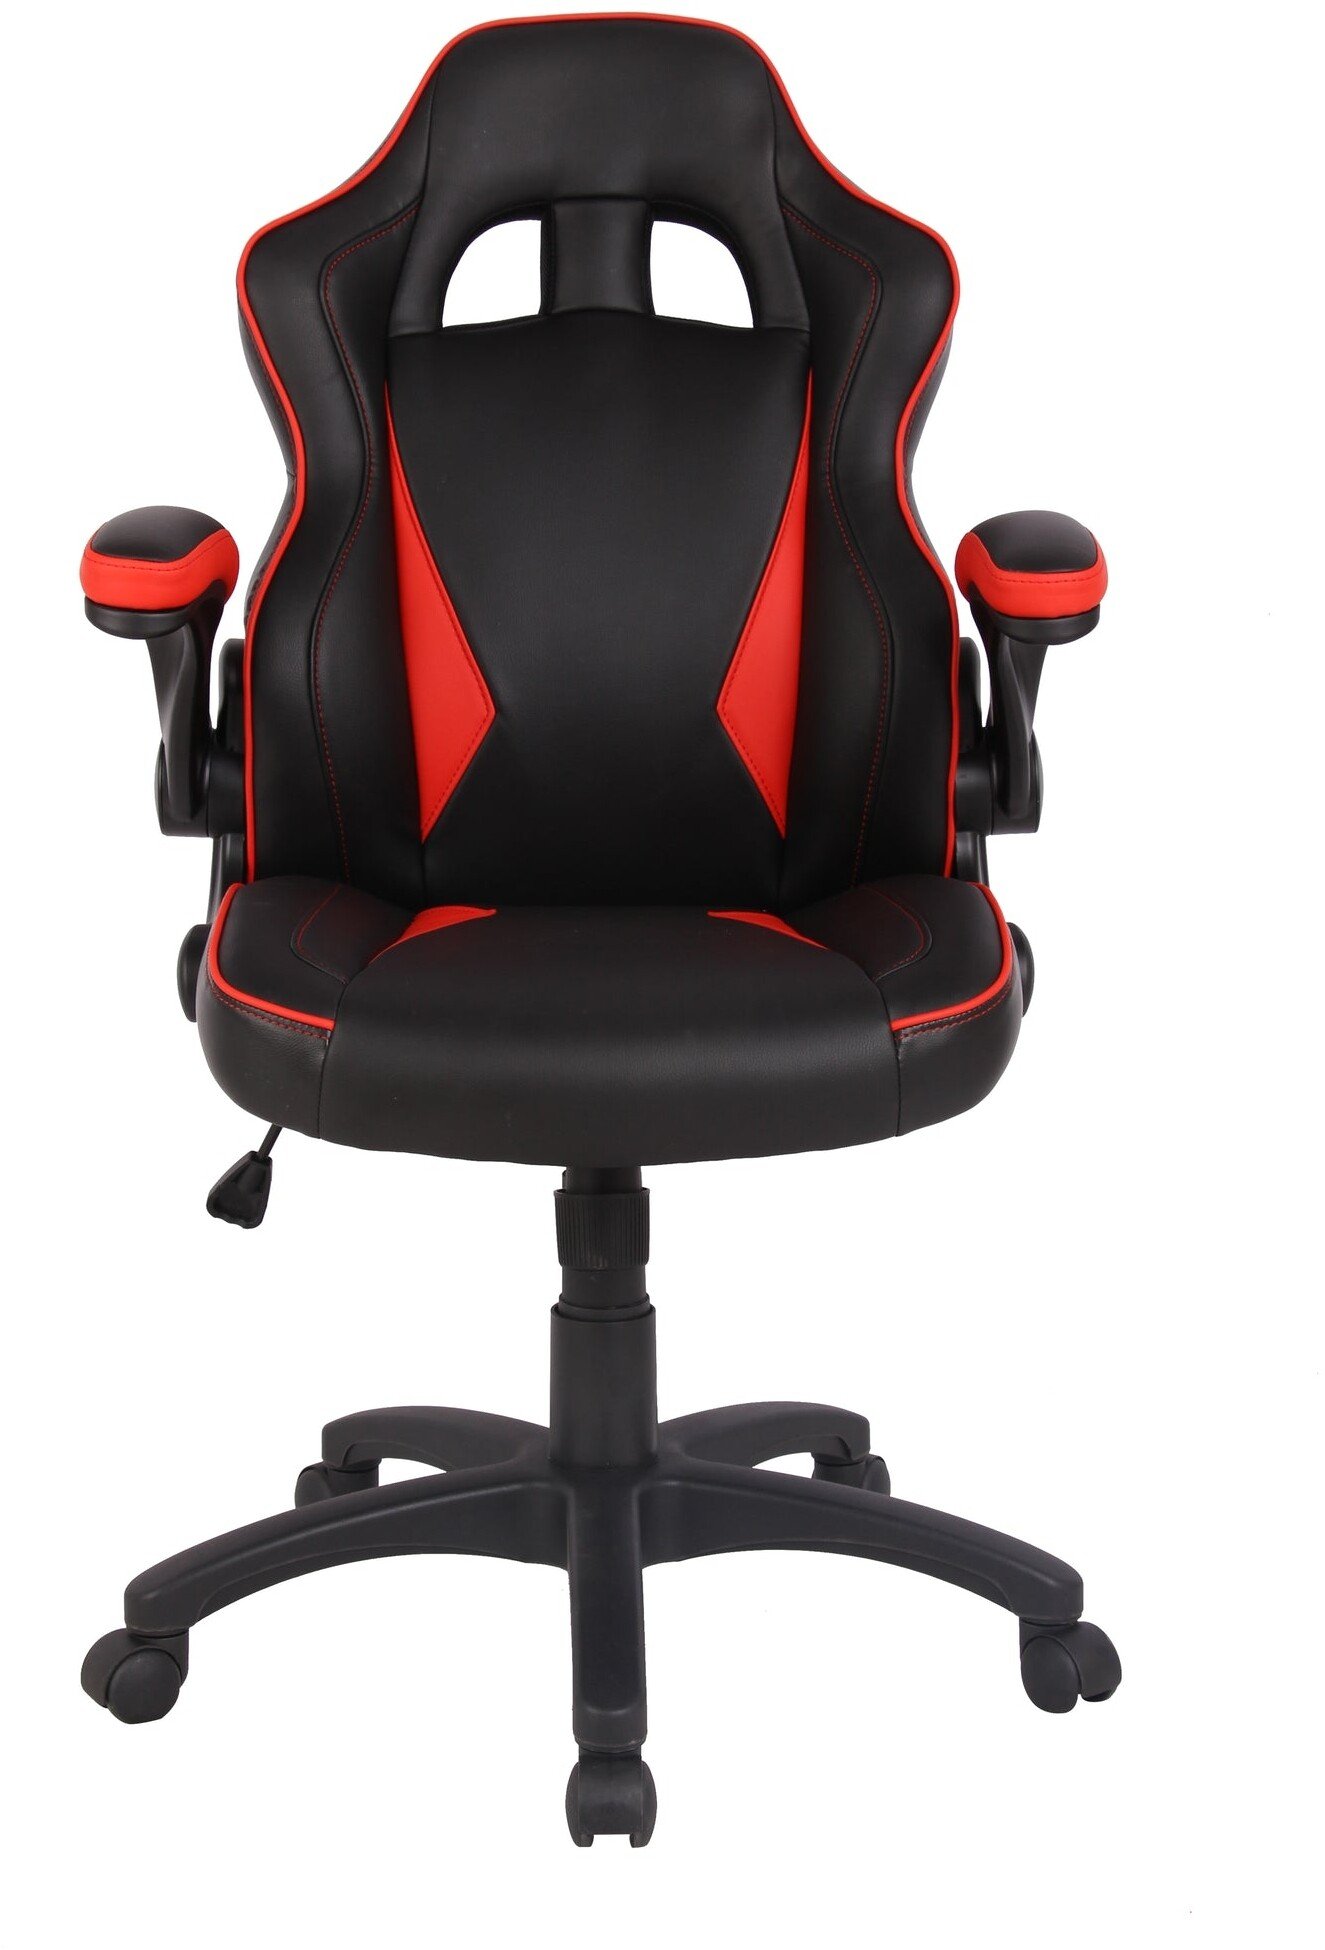 gamer chairs